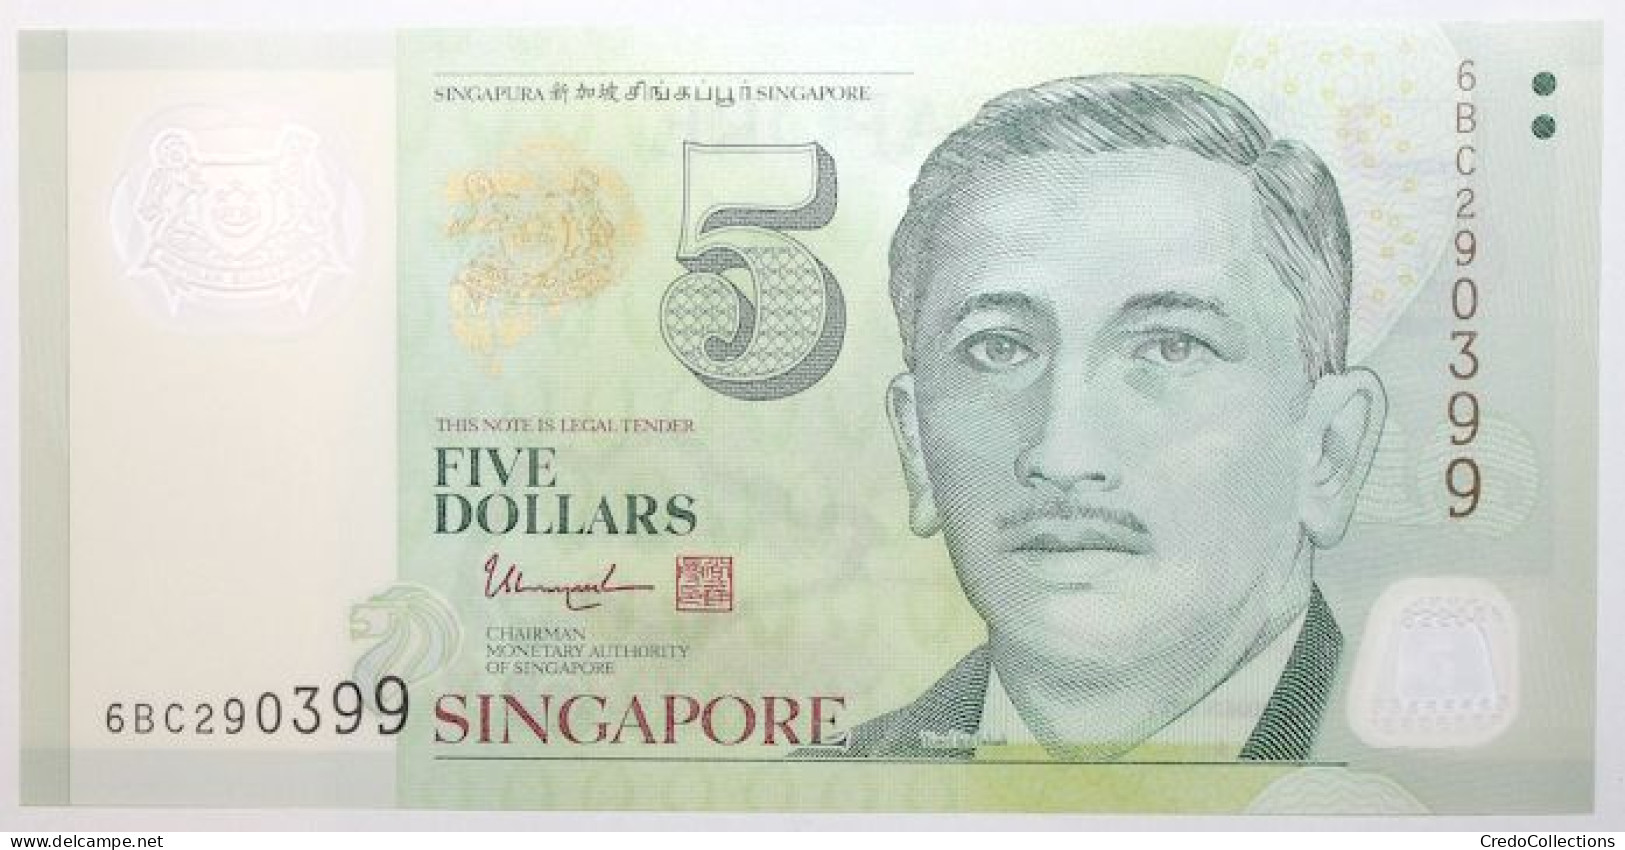 Singapour - 5 Dollars - 2020 - PICK 47g - NEUF - Singapour